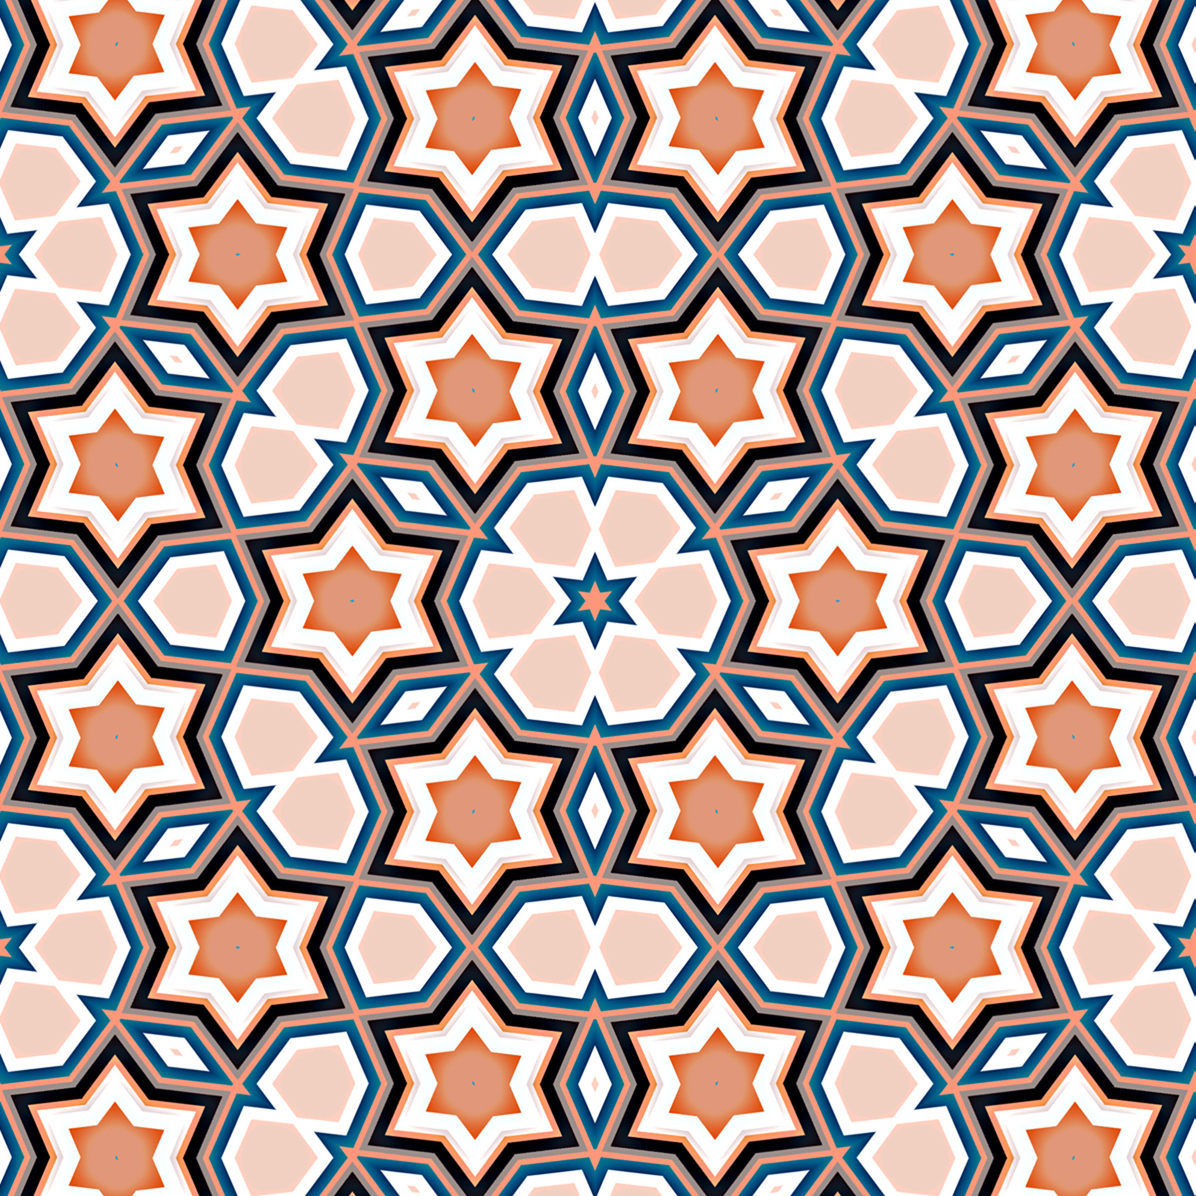 COOL WALLPAPERS: 09/06/11 | Islamic art pattern, Islamic patterns ...